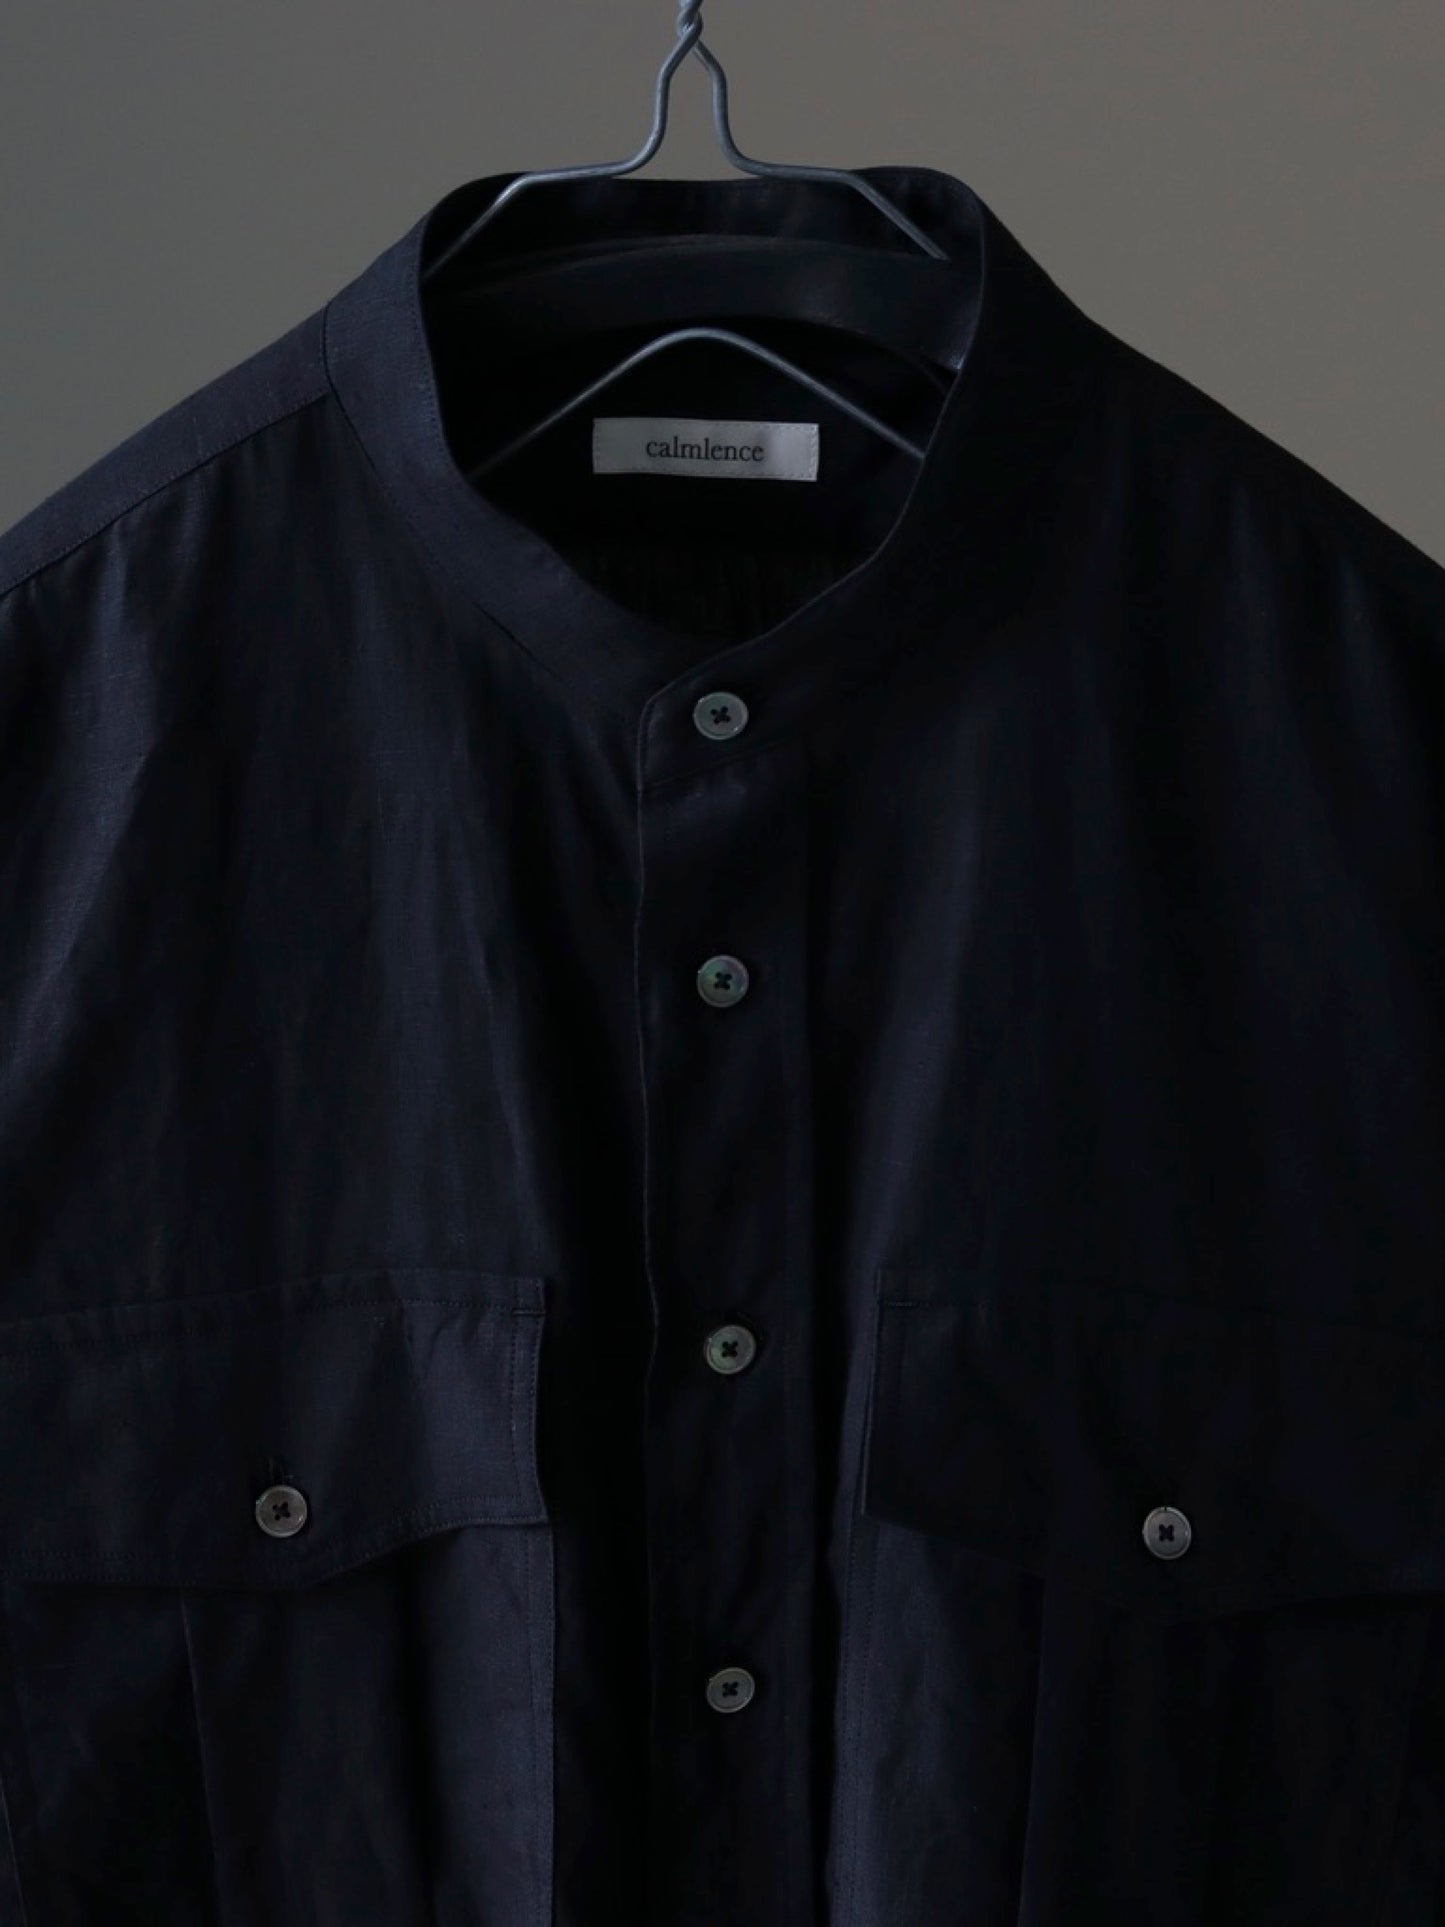 calmlence-band-collar-pullover-shirt-black-3